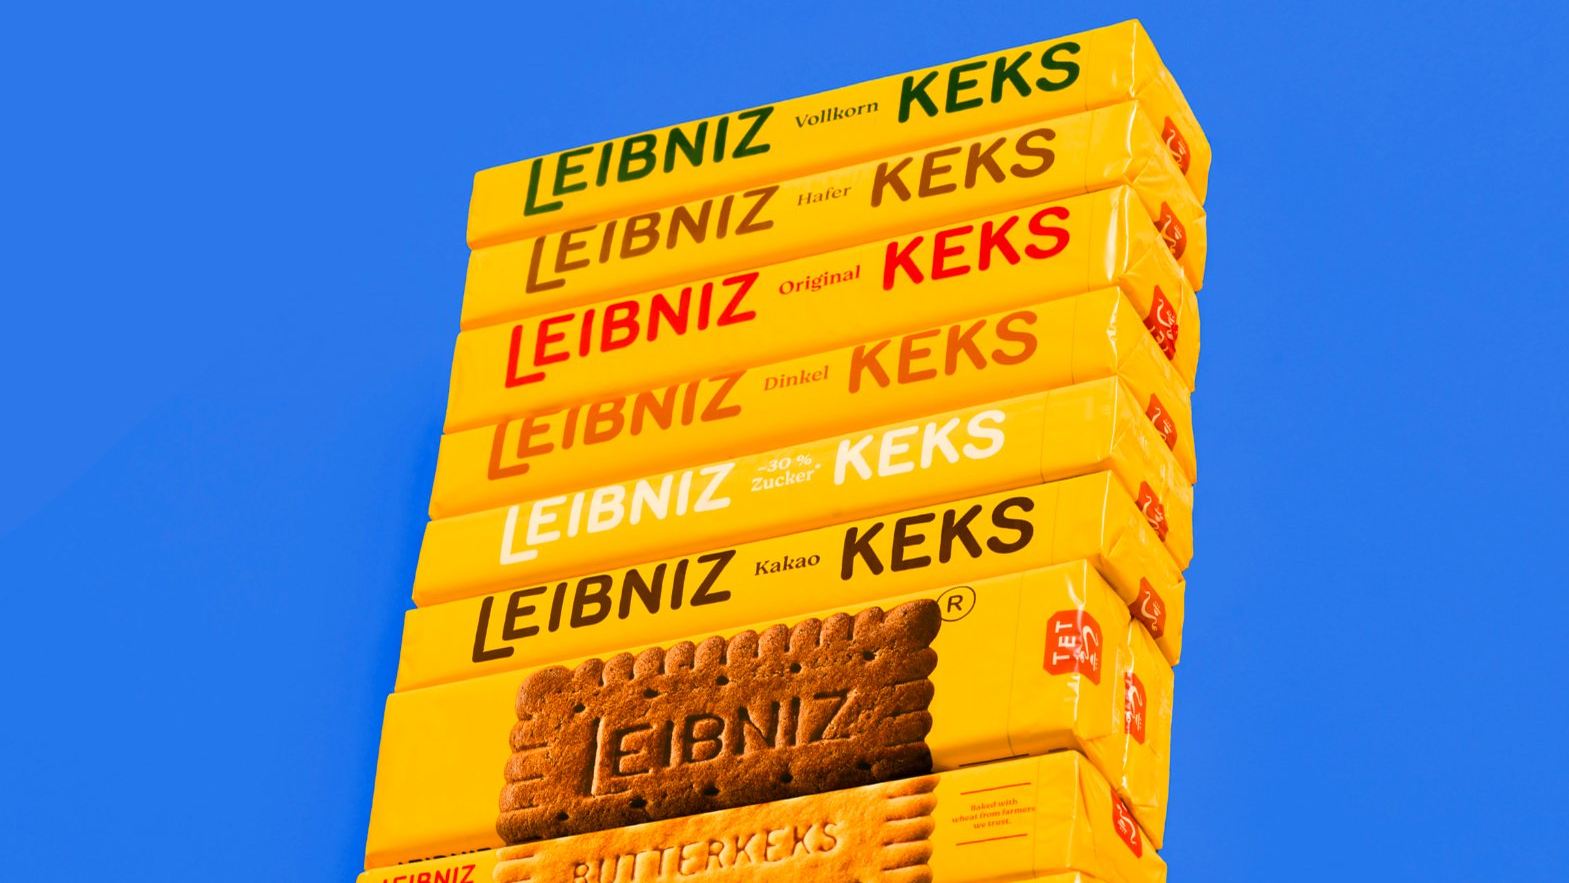 Auge Design Sinks Its Teeth Into Leibniz-Keks’ Rich Legacy For Brand Refresh